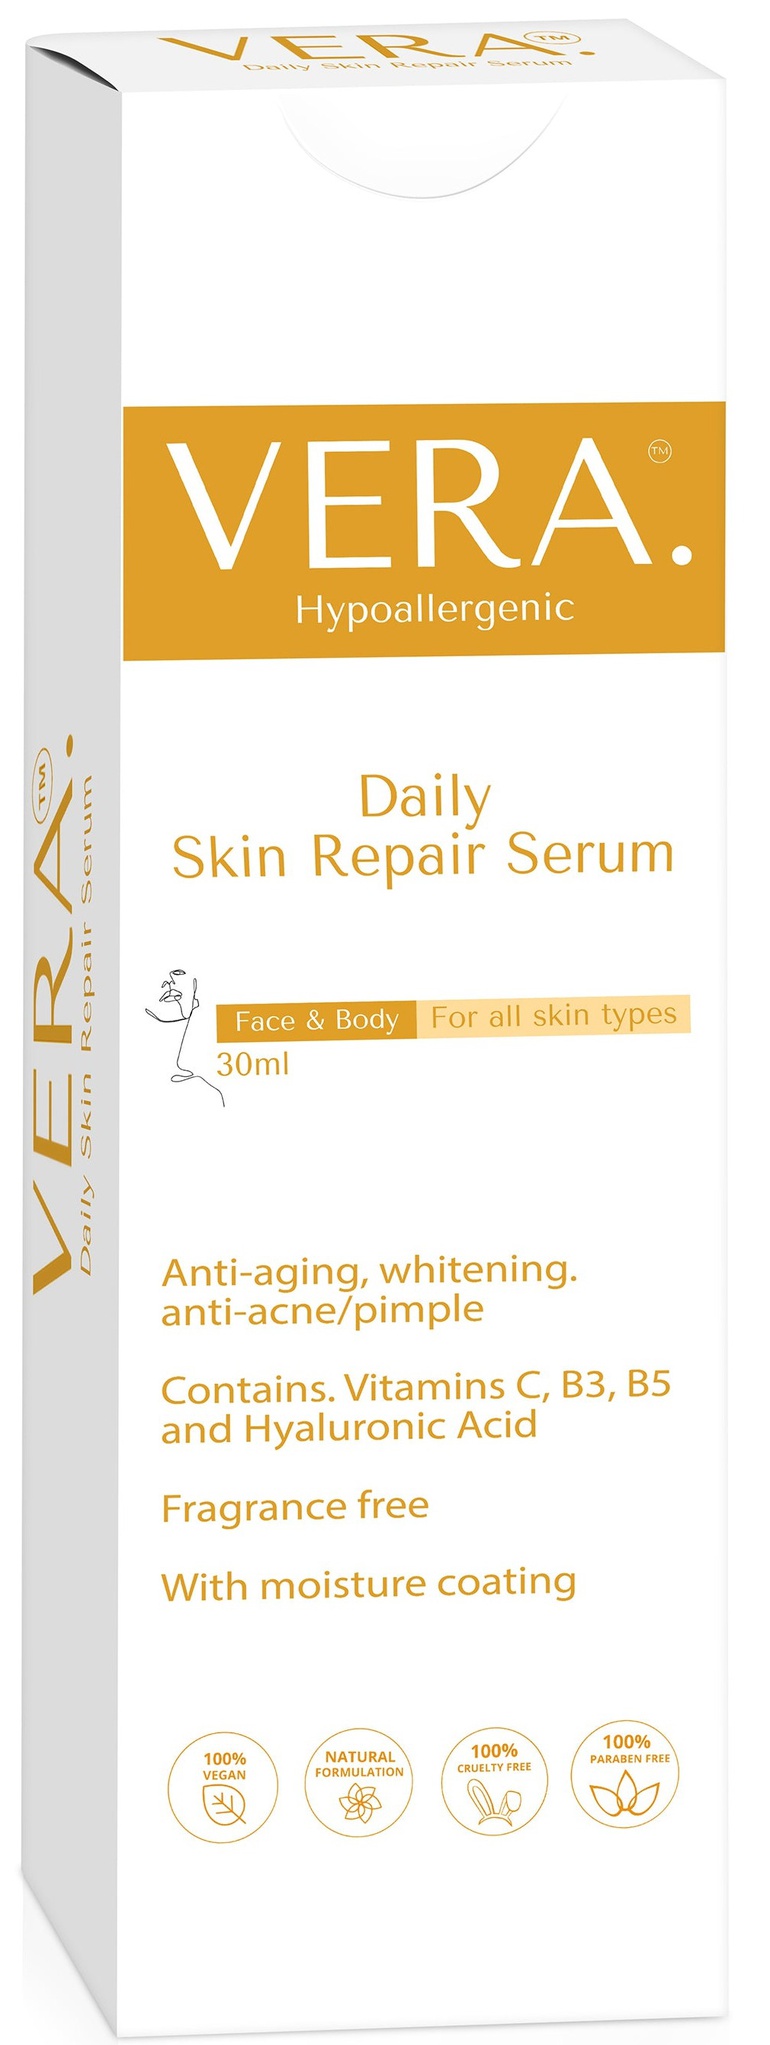 VERA. Hypoallergenic Daily Skin Repair Serum